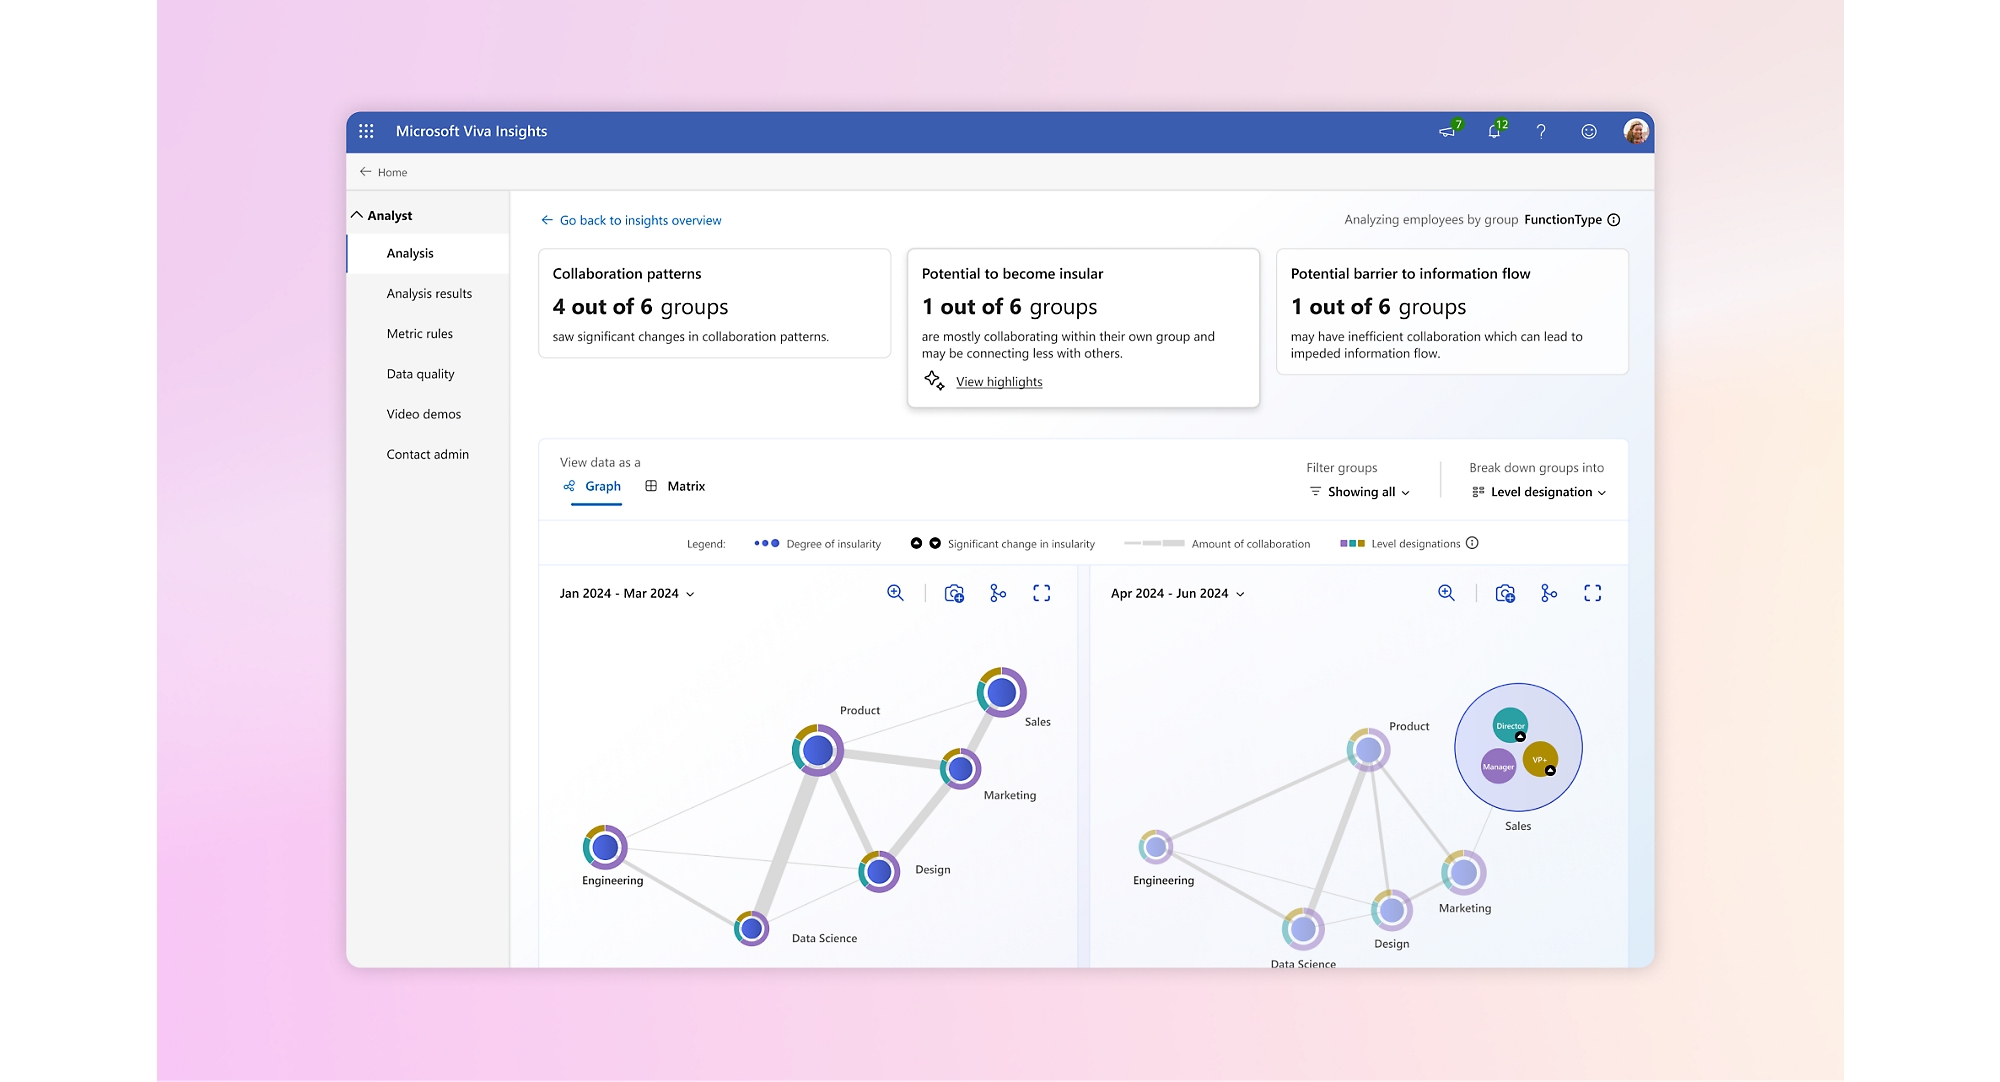 Microsoft Viva Insights dashboard showing data visualizations on collaboration patterns